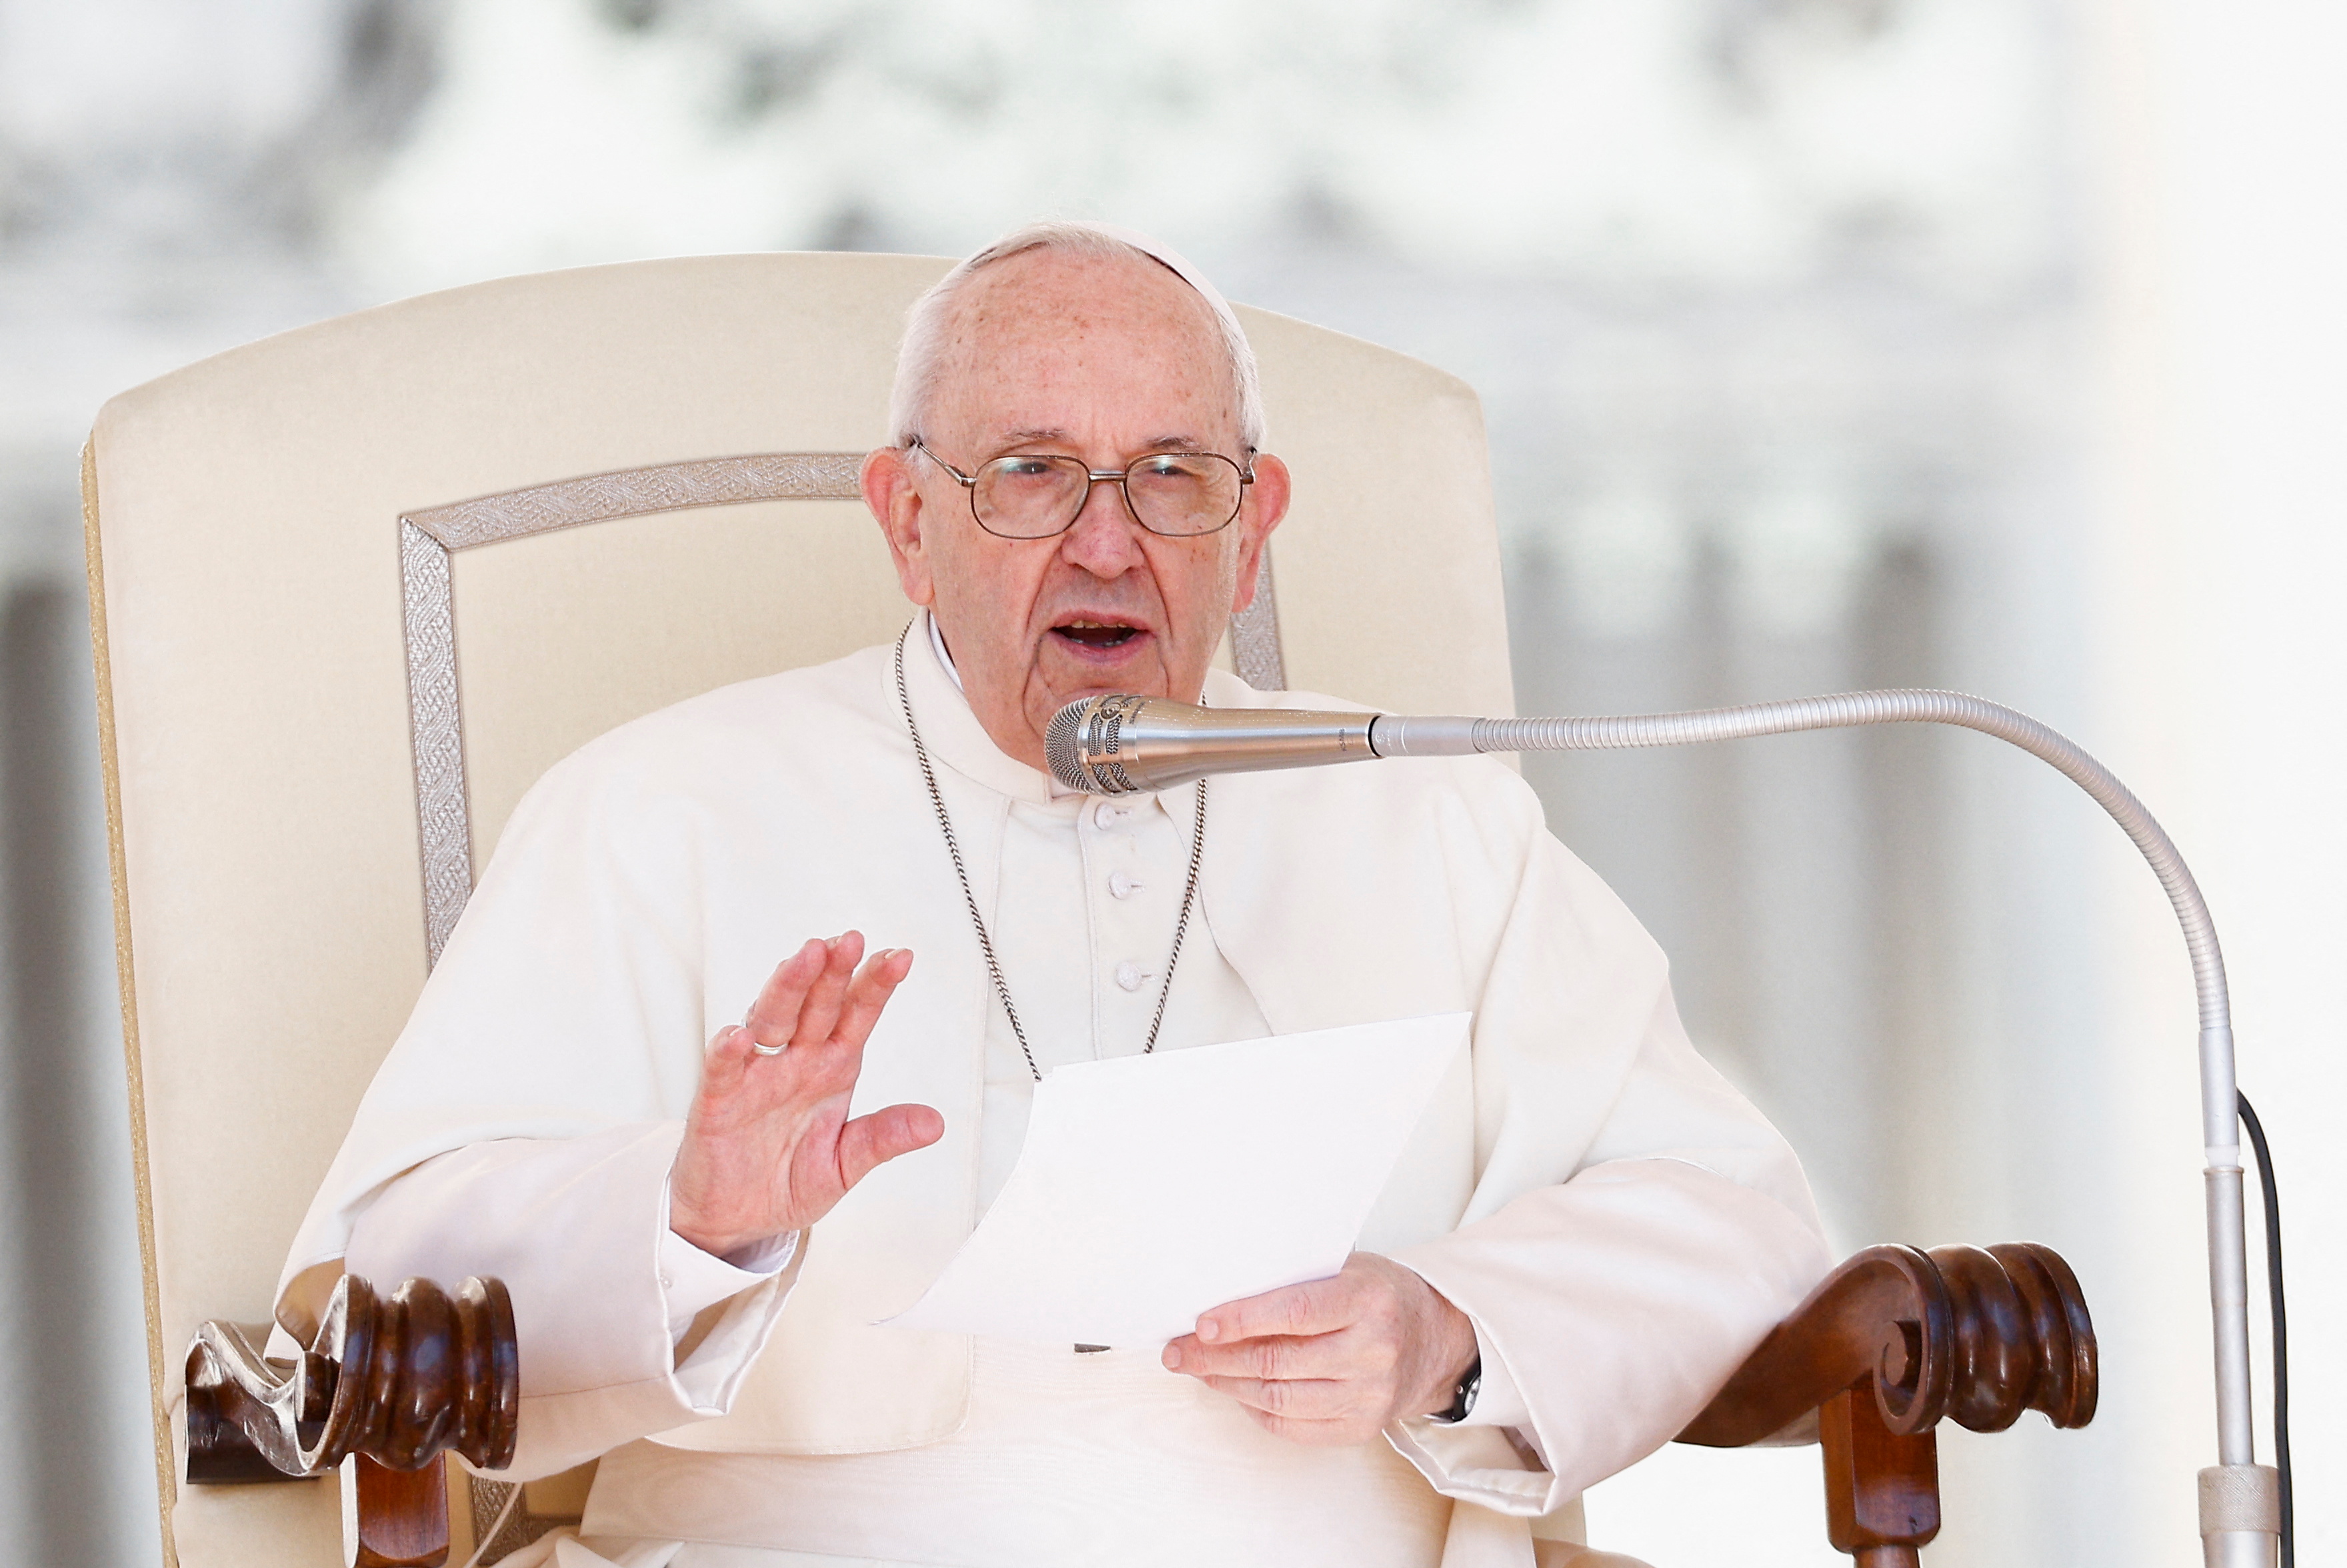 El papa aconsejó a las suegras a no criticar. REUTERS/Guglielmo Mangiapane